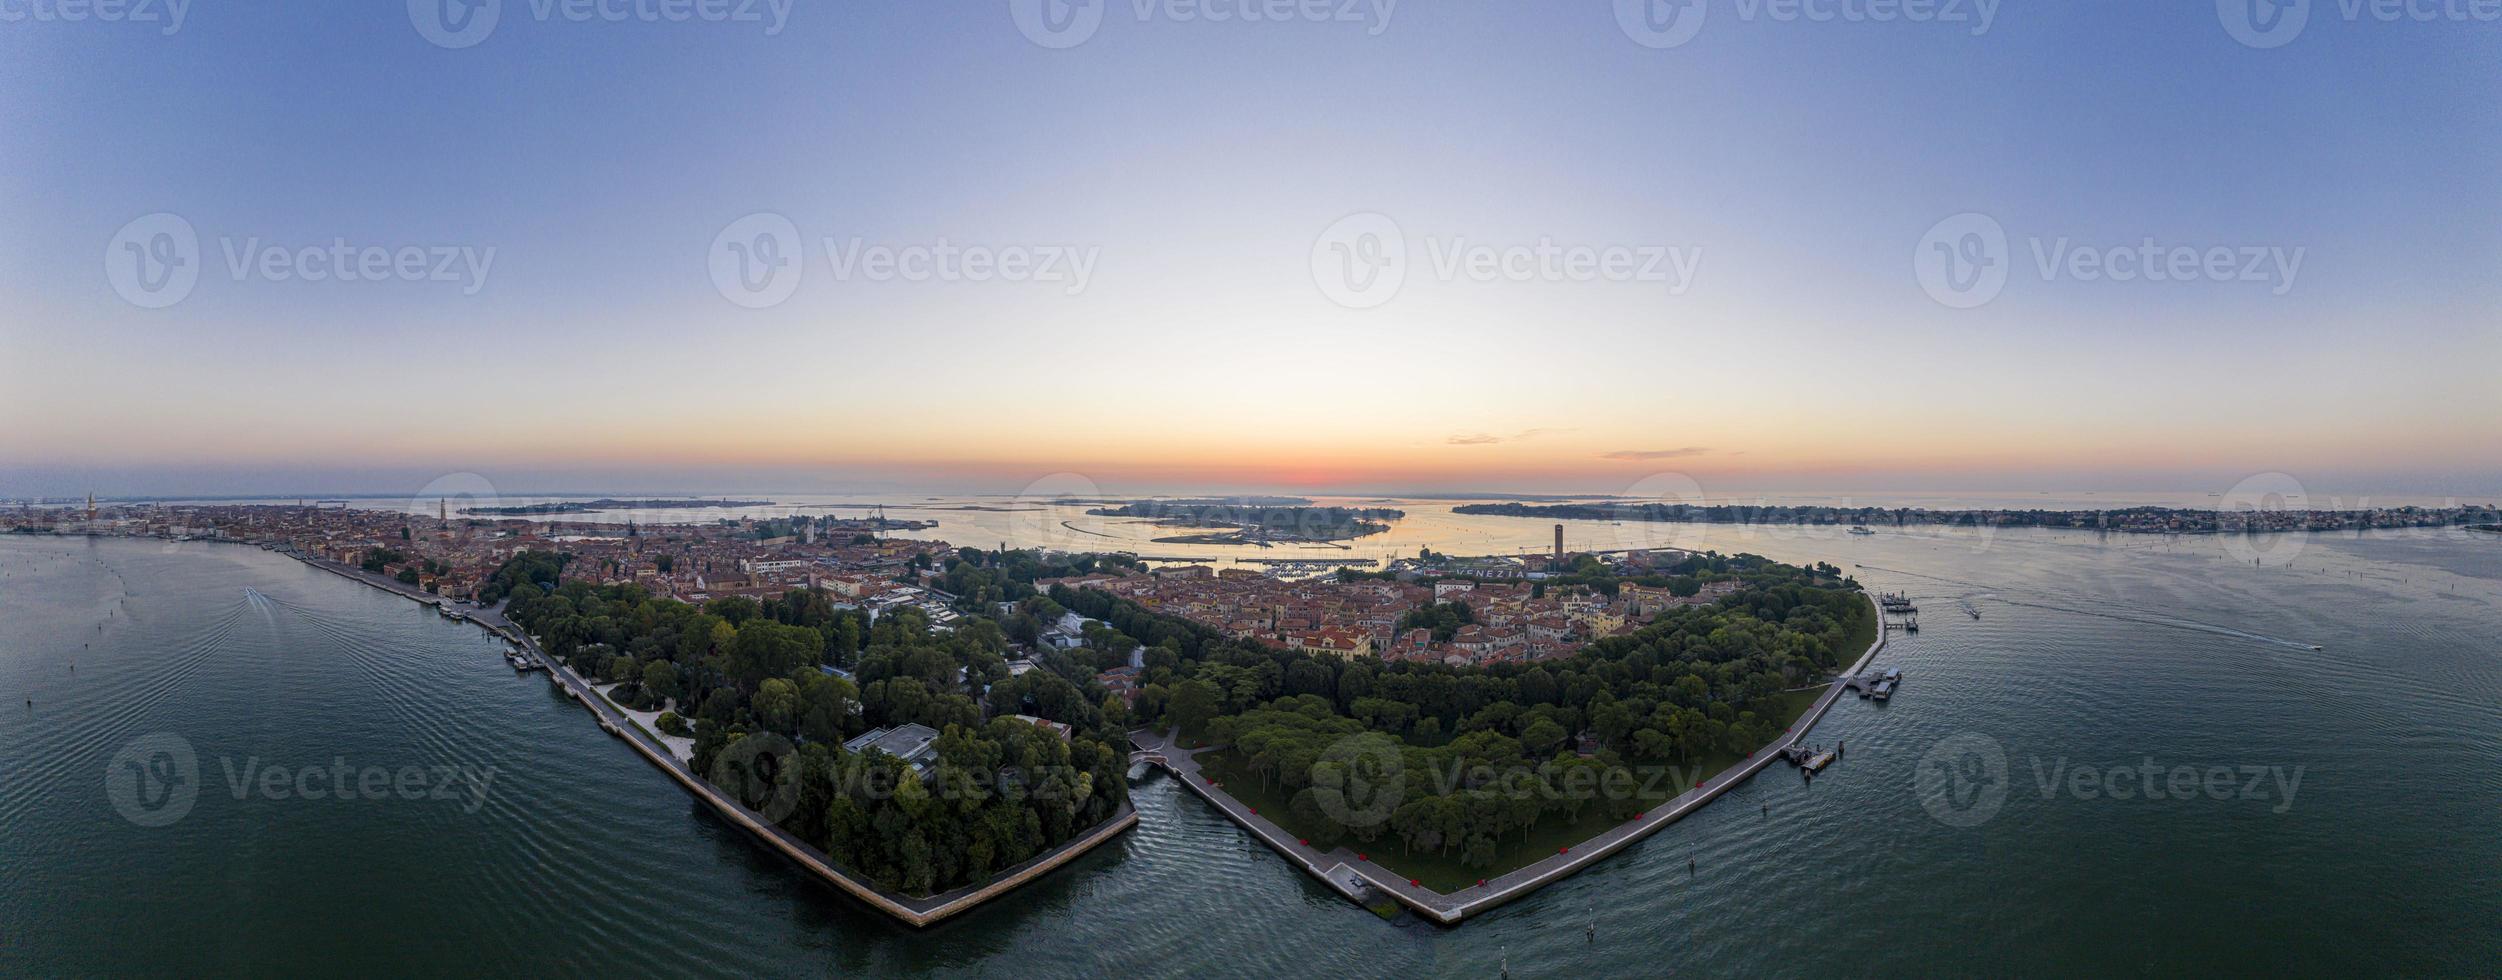 panorama aéreo da lagoa de veneza e ilha de lido durante o nascer do sol foto